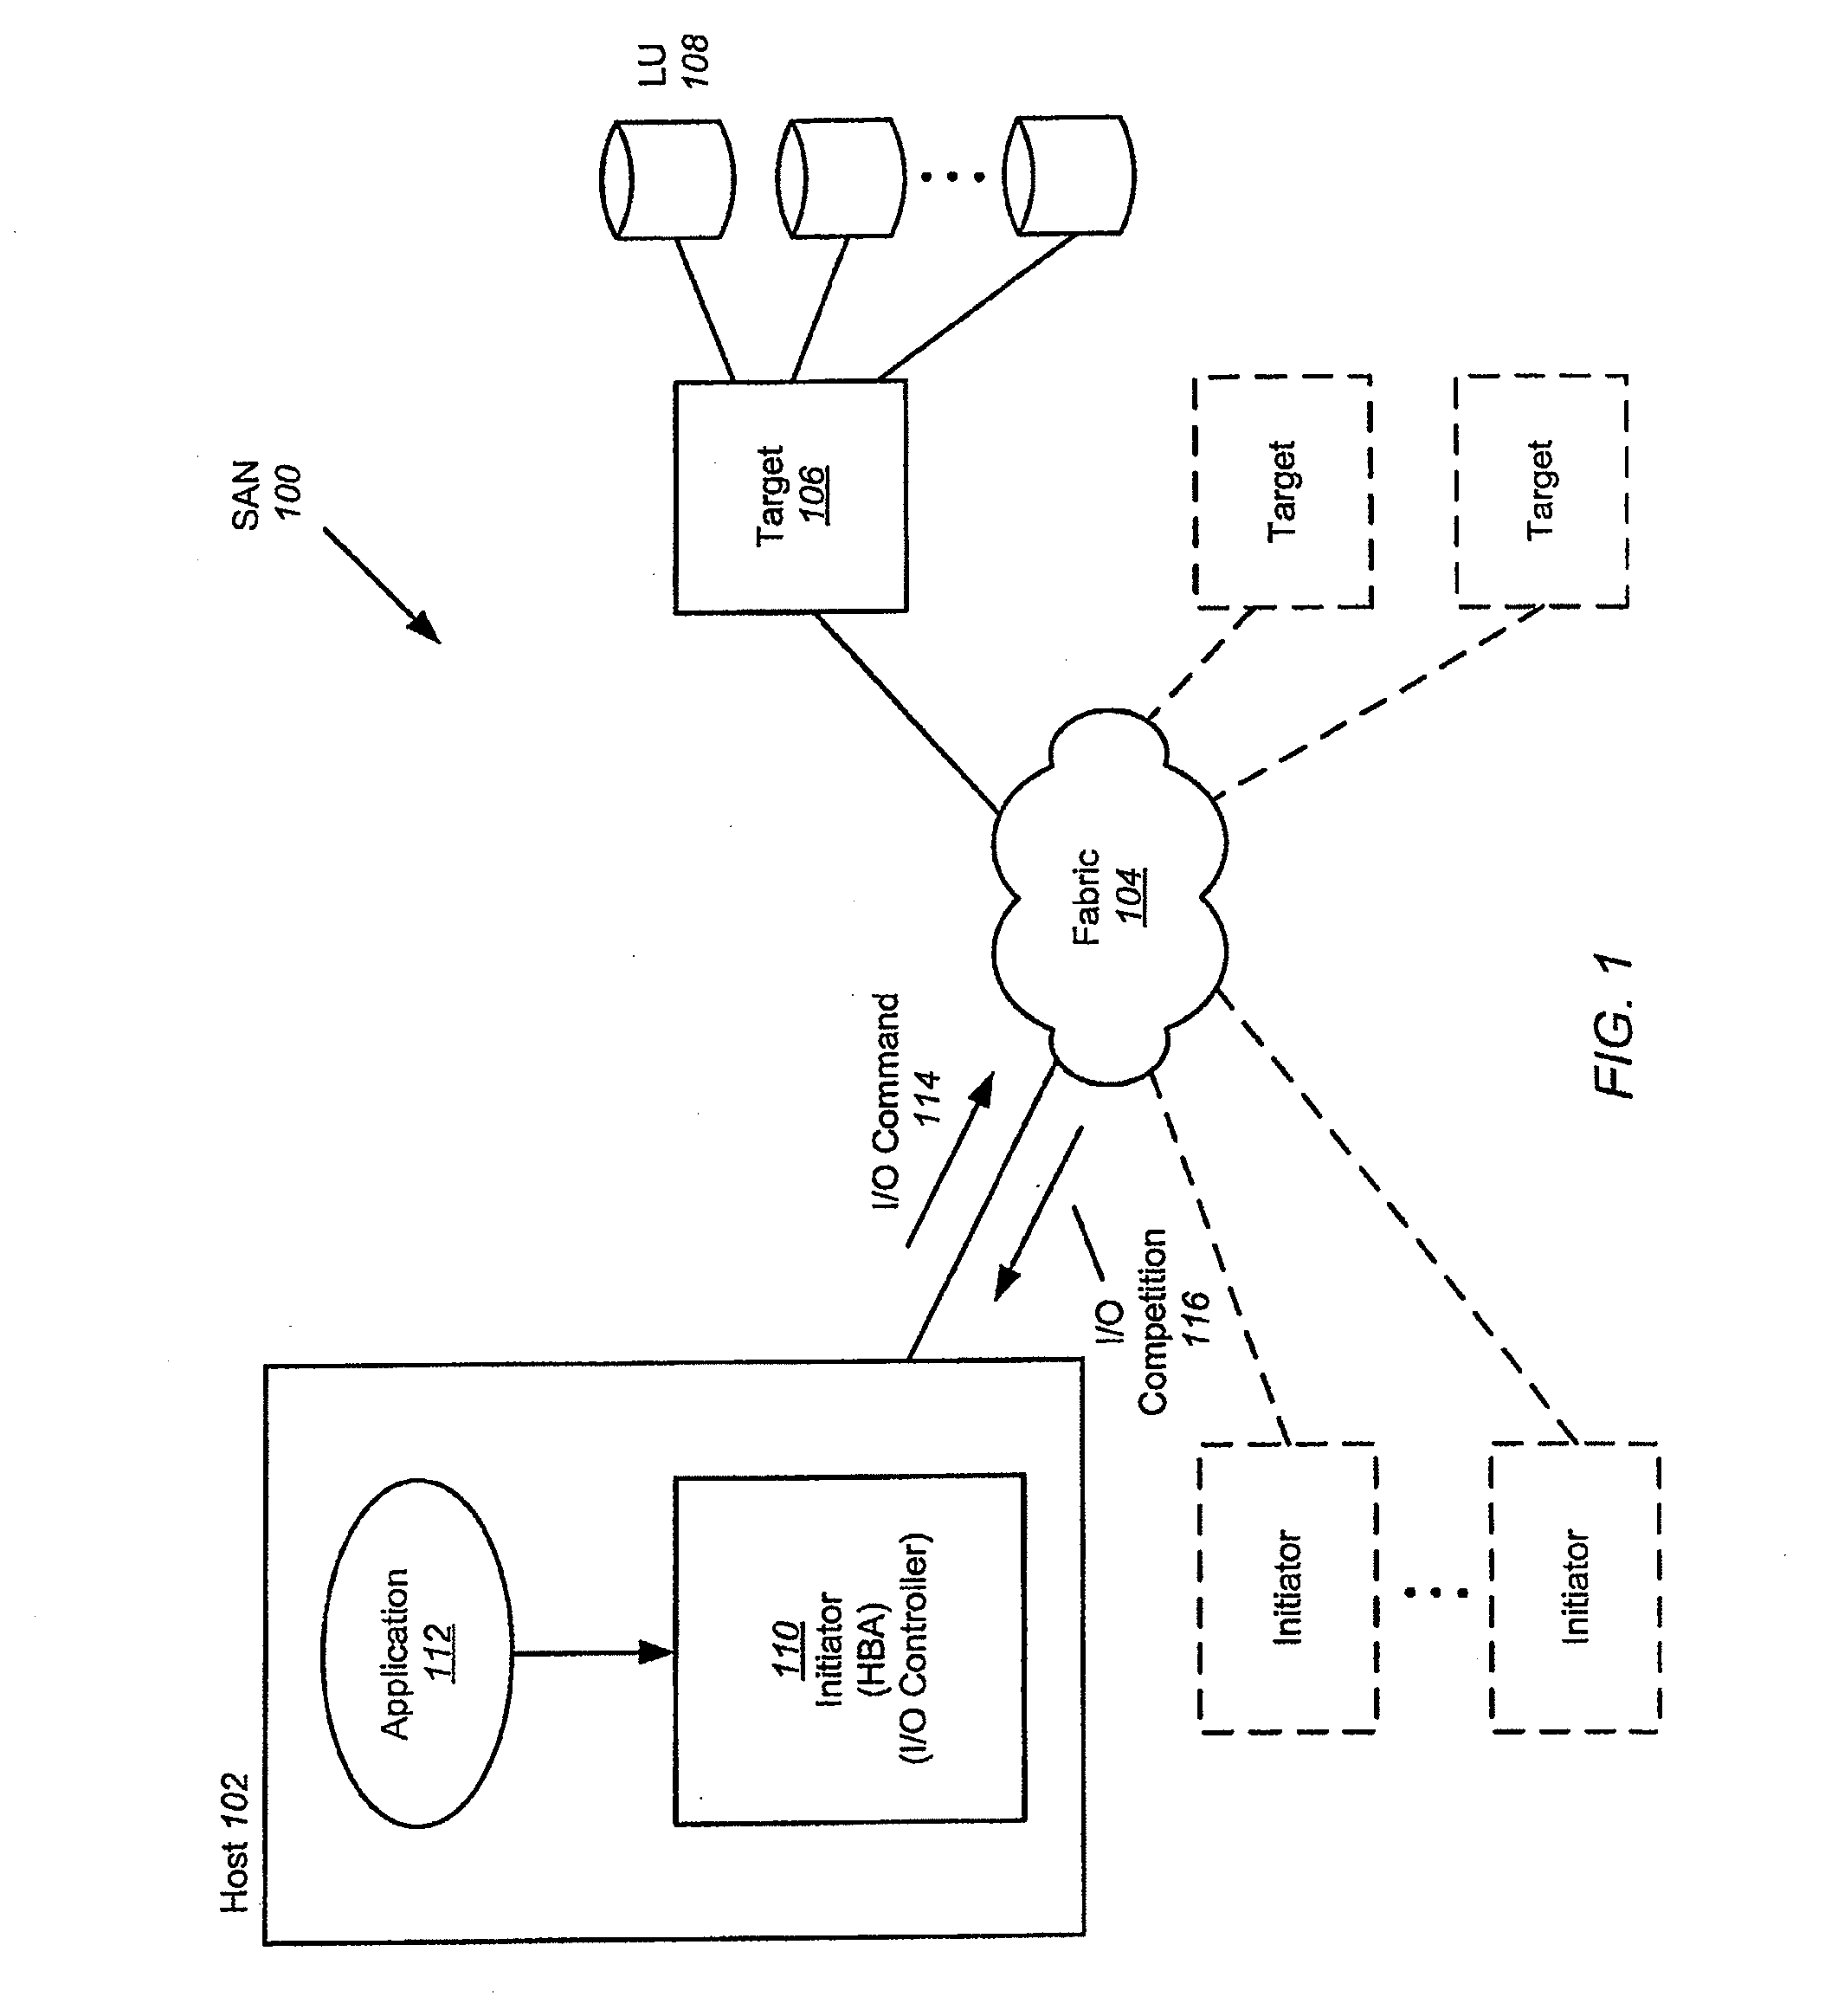 Computer system input/output management